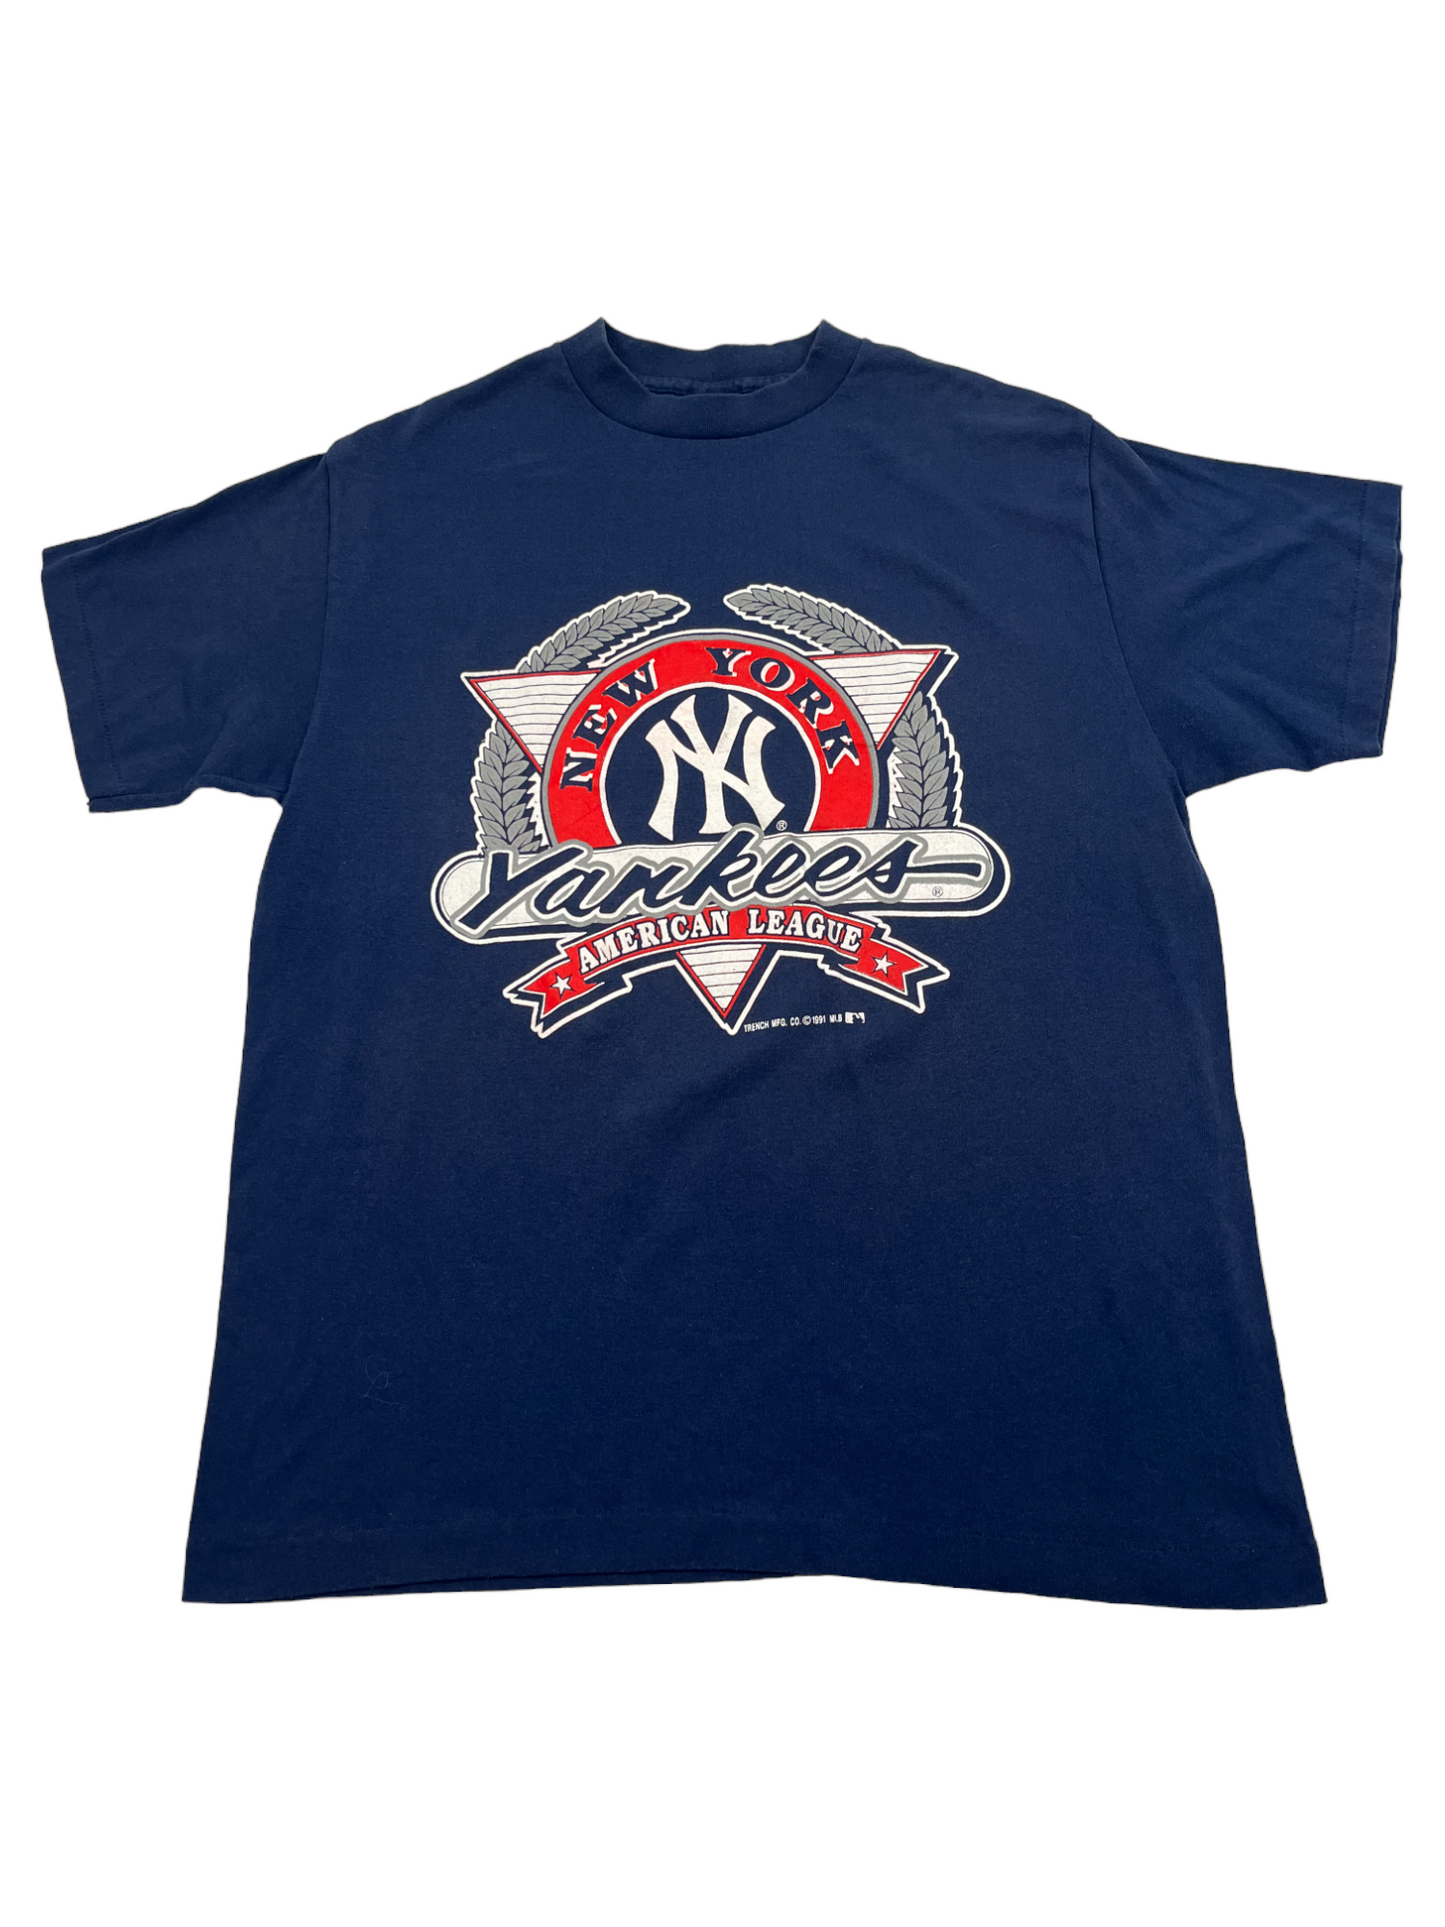 New York Yankees American League Tee